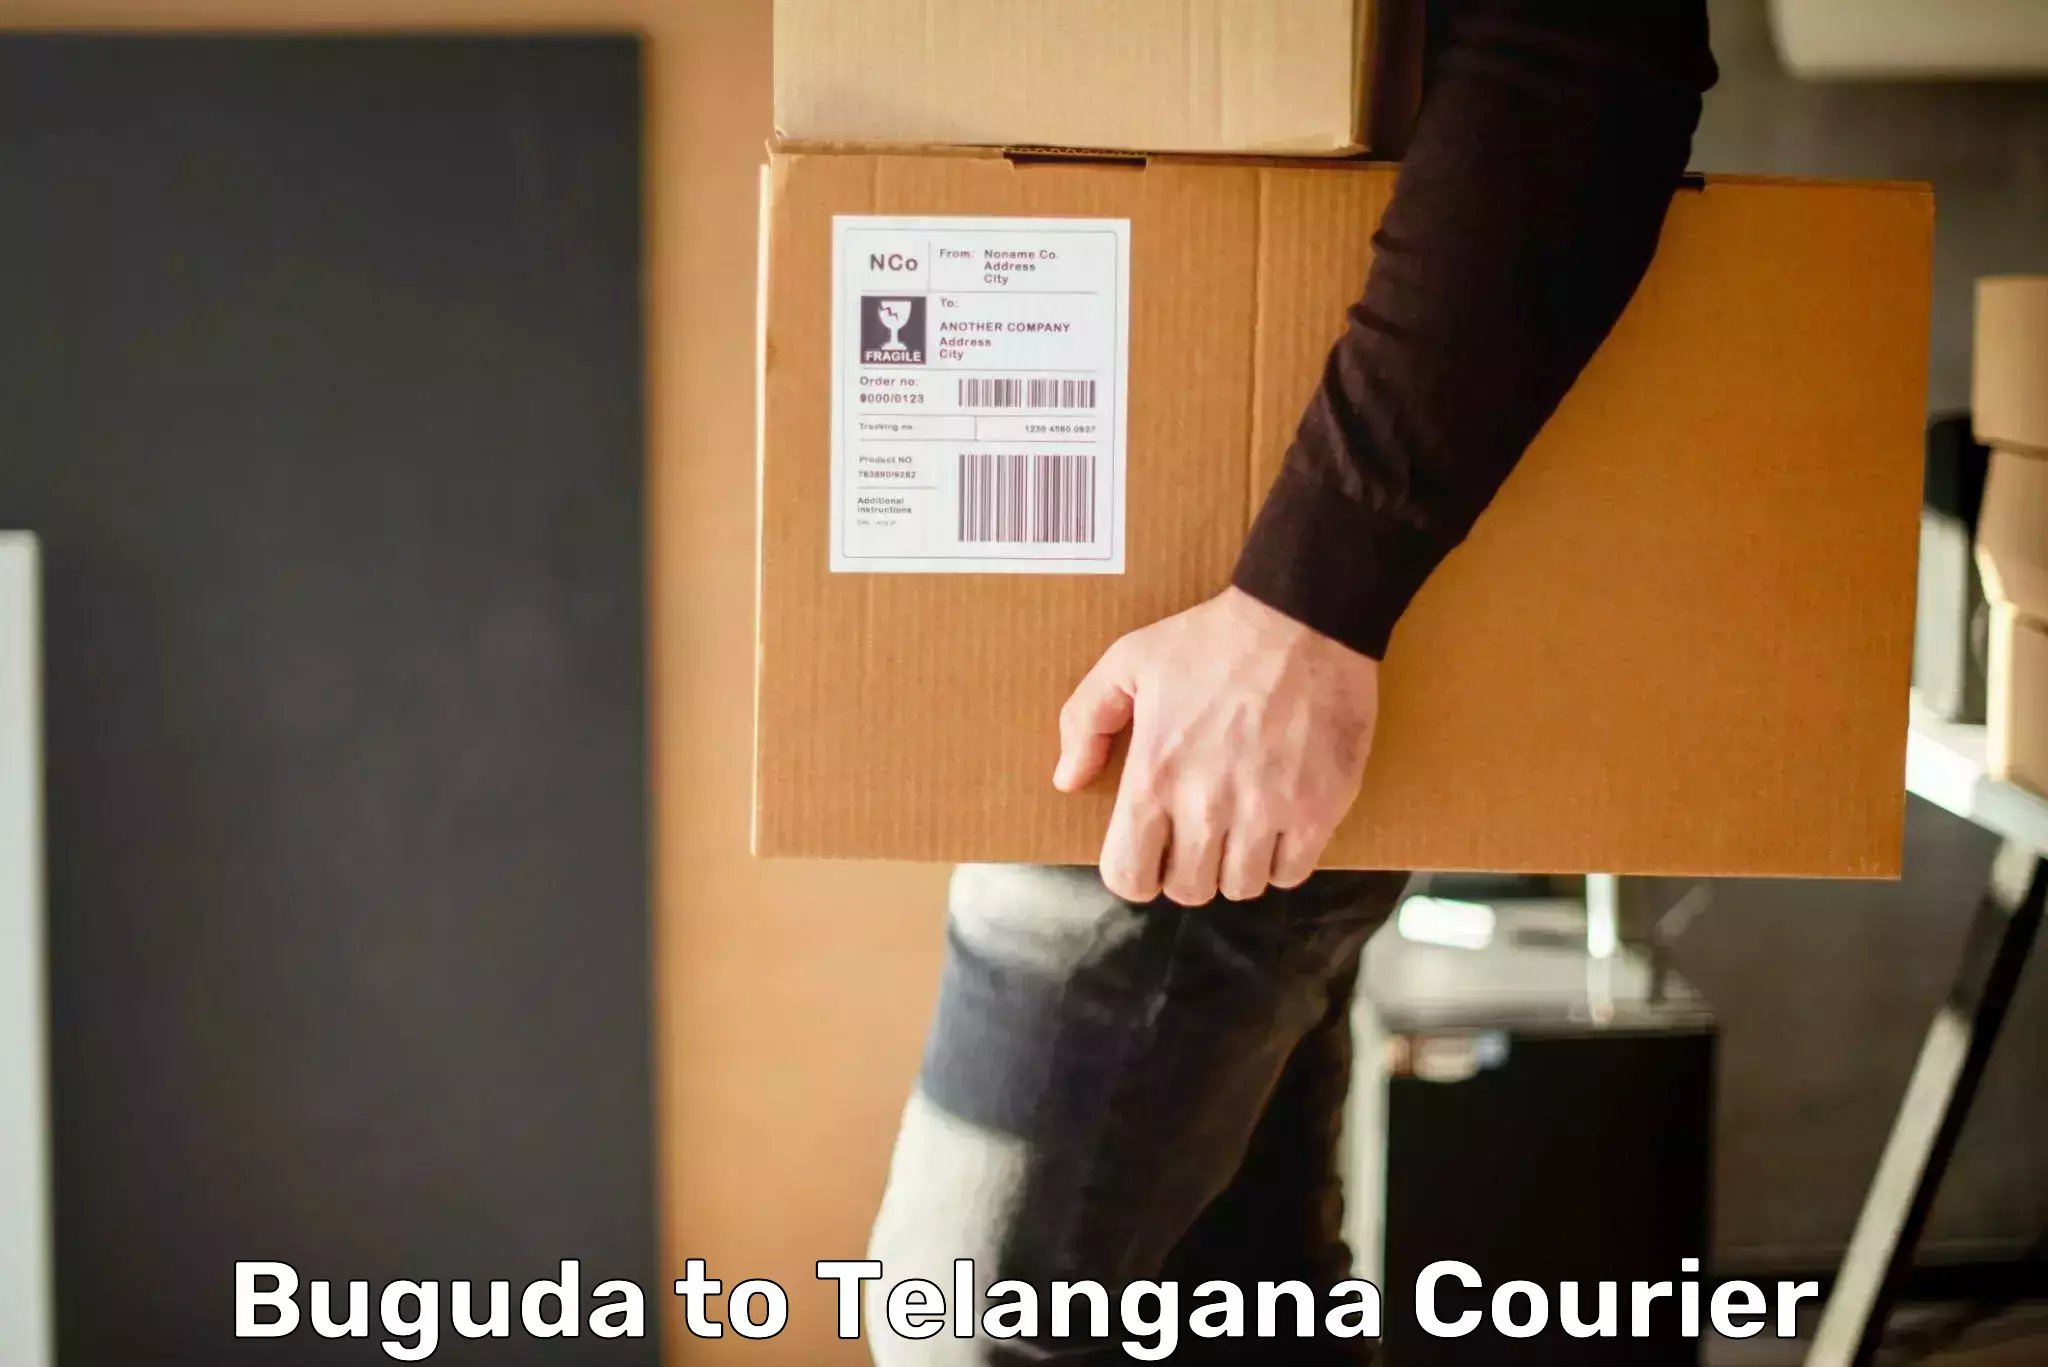 Bulk shipping discounts Buguda to Gangadhara